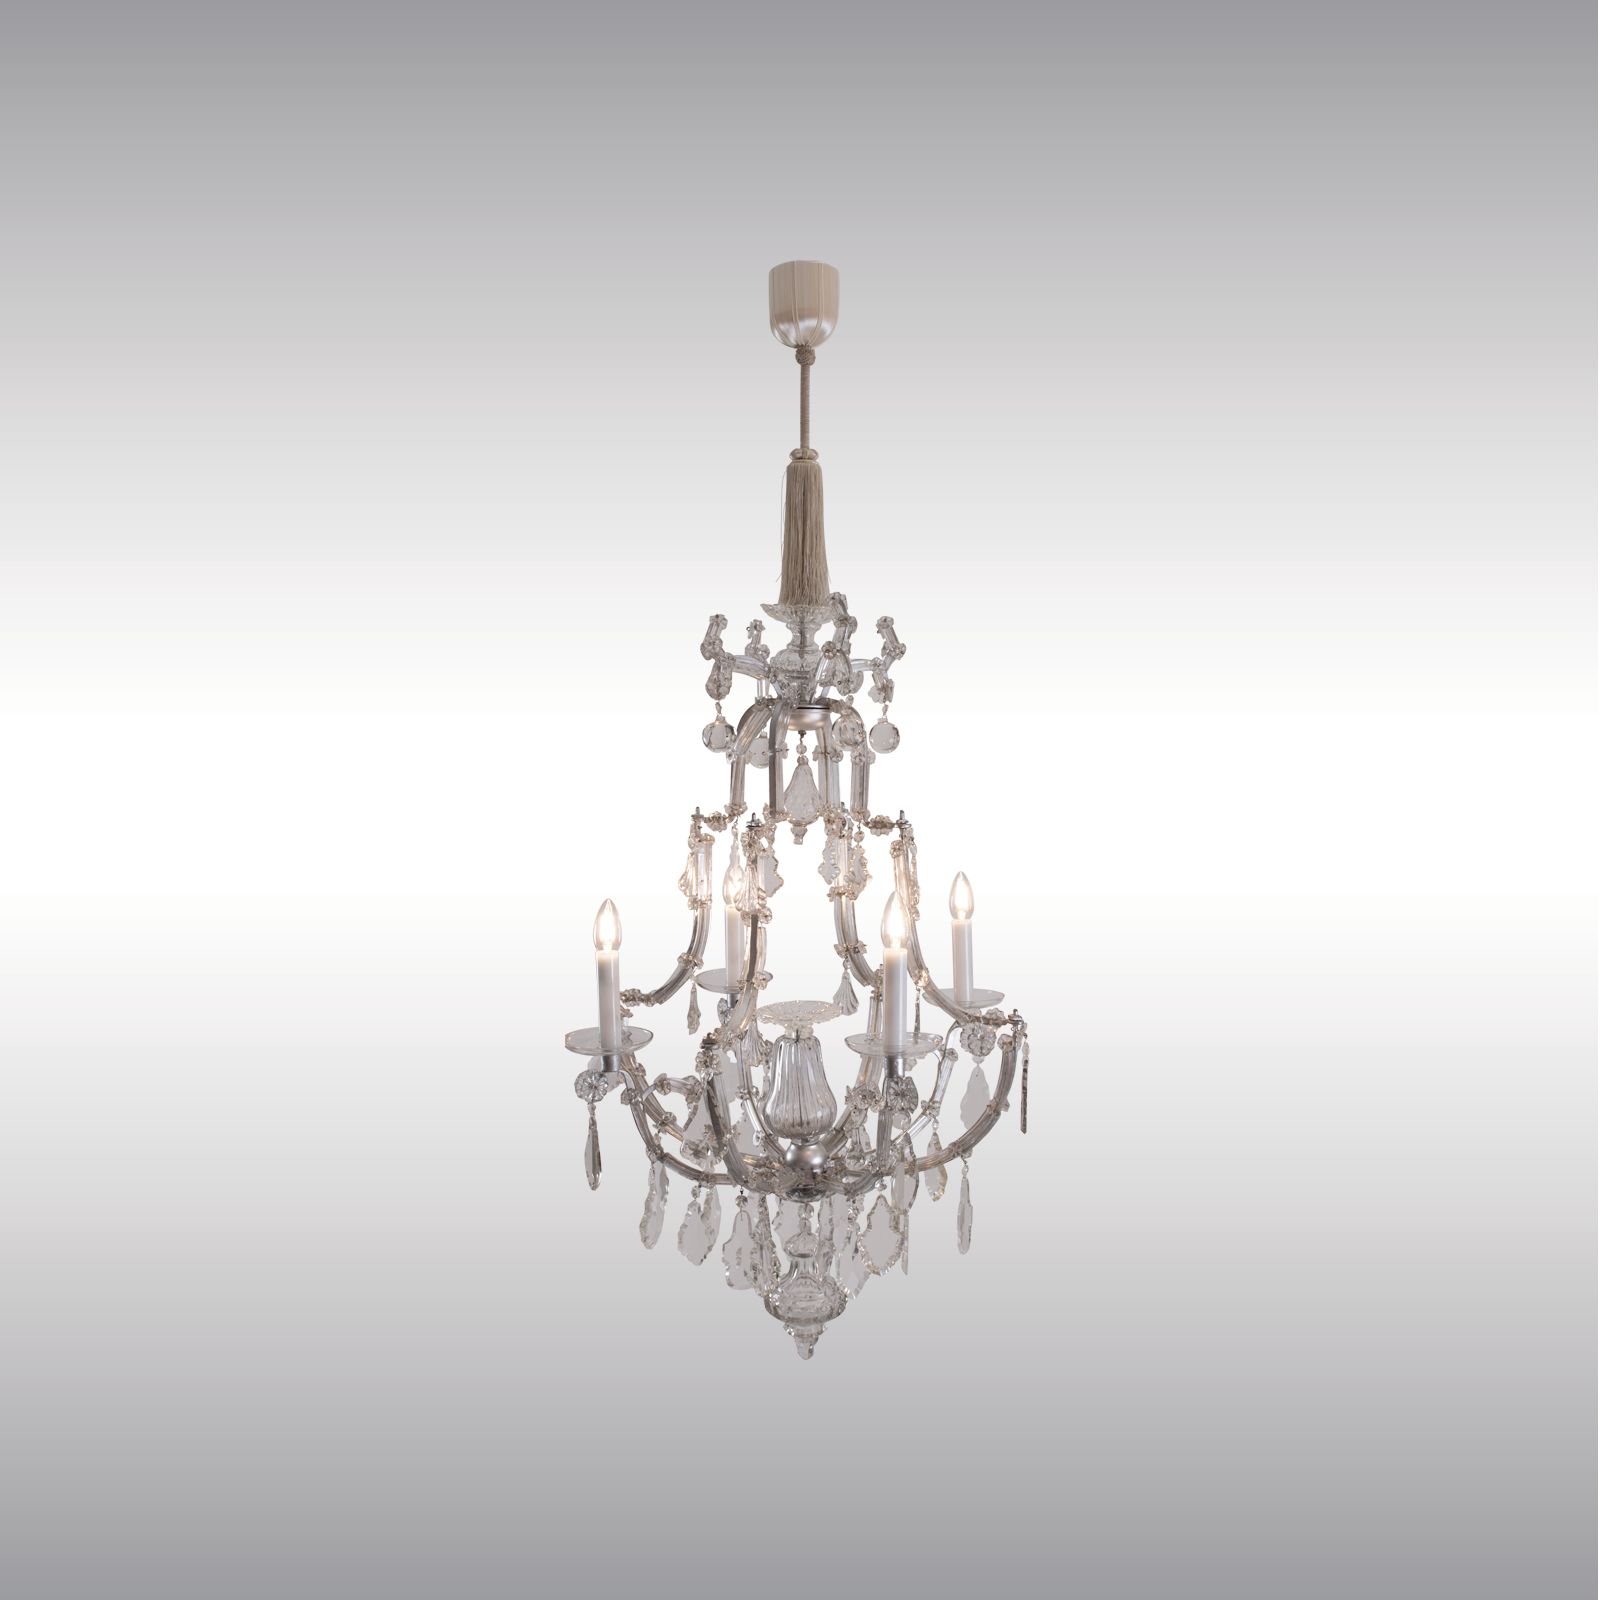 WOKA LAMPS VIENNA - OrderNr.: 44057|Baroque glass Chandelier 18th century